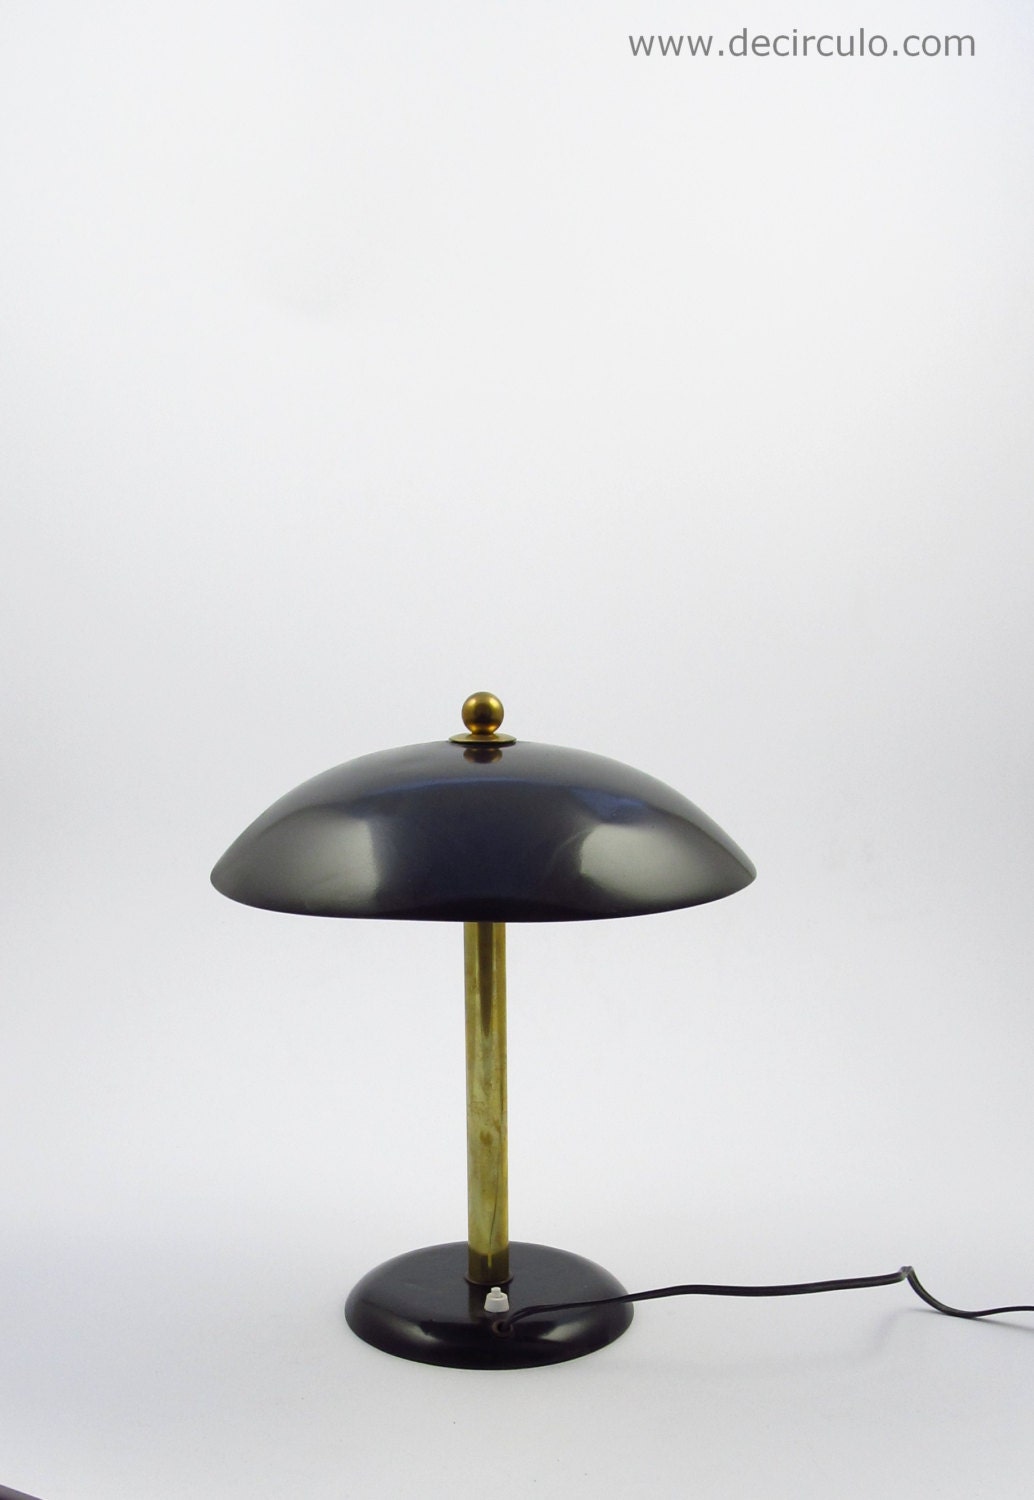 Art deco table lamp, heavy black metal desklamp from the artdeco era